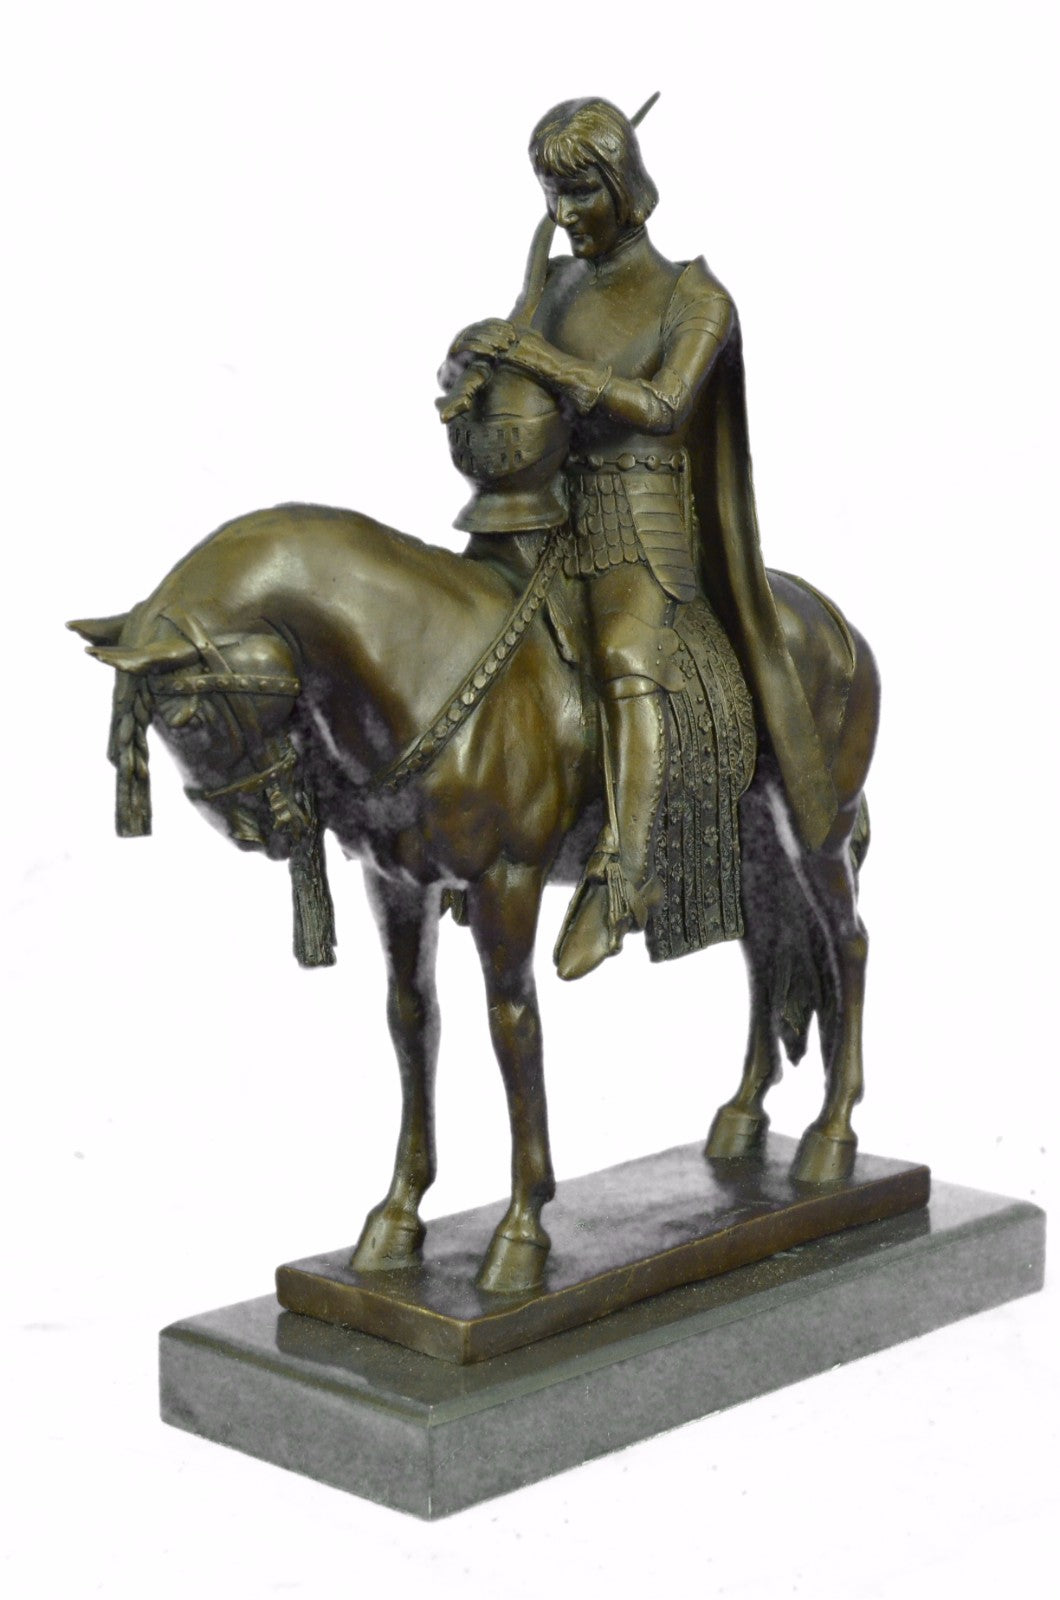 Bronze Sculpture of King Arthur Legendary British Leader Collectible Home Design